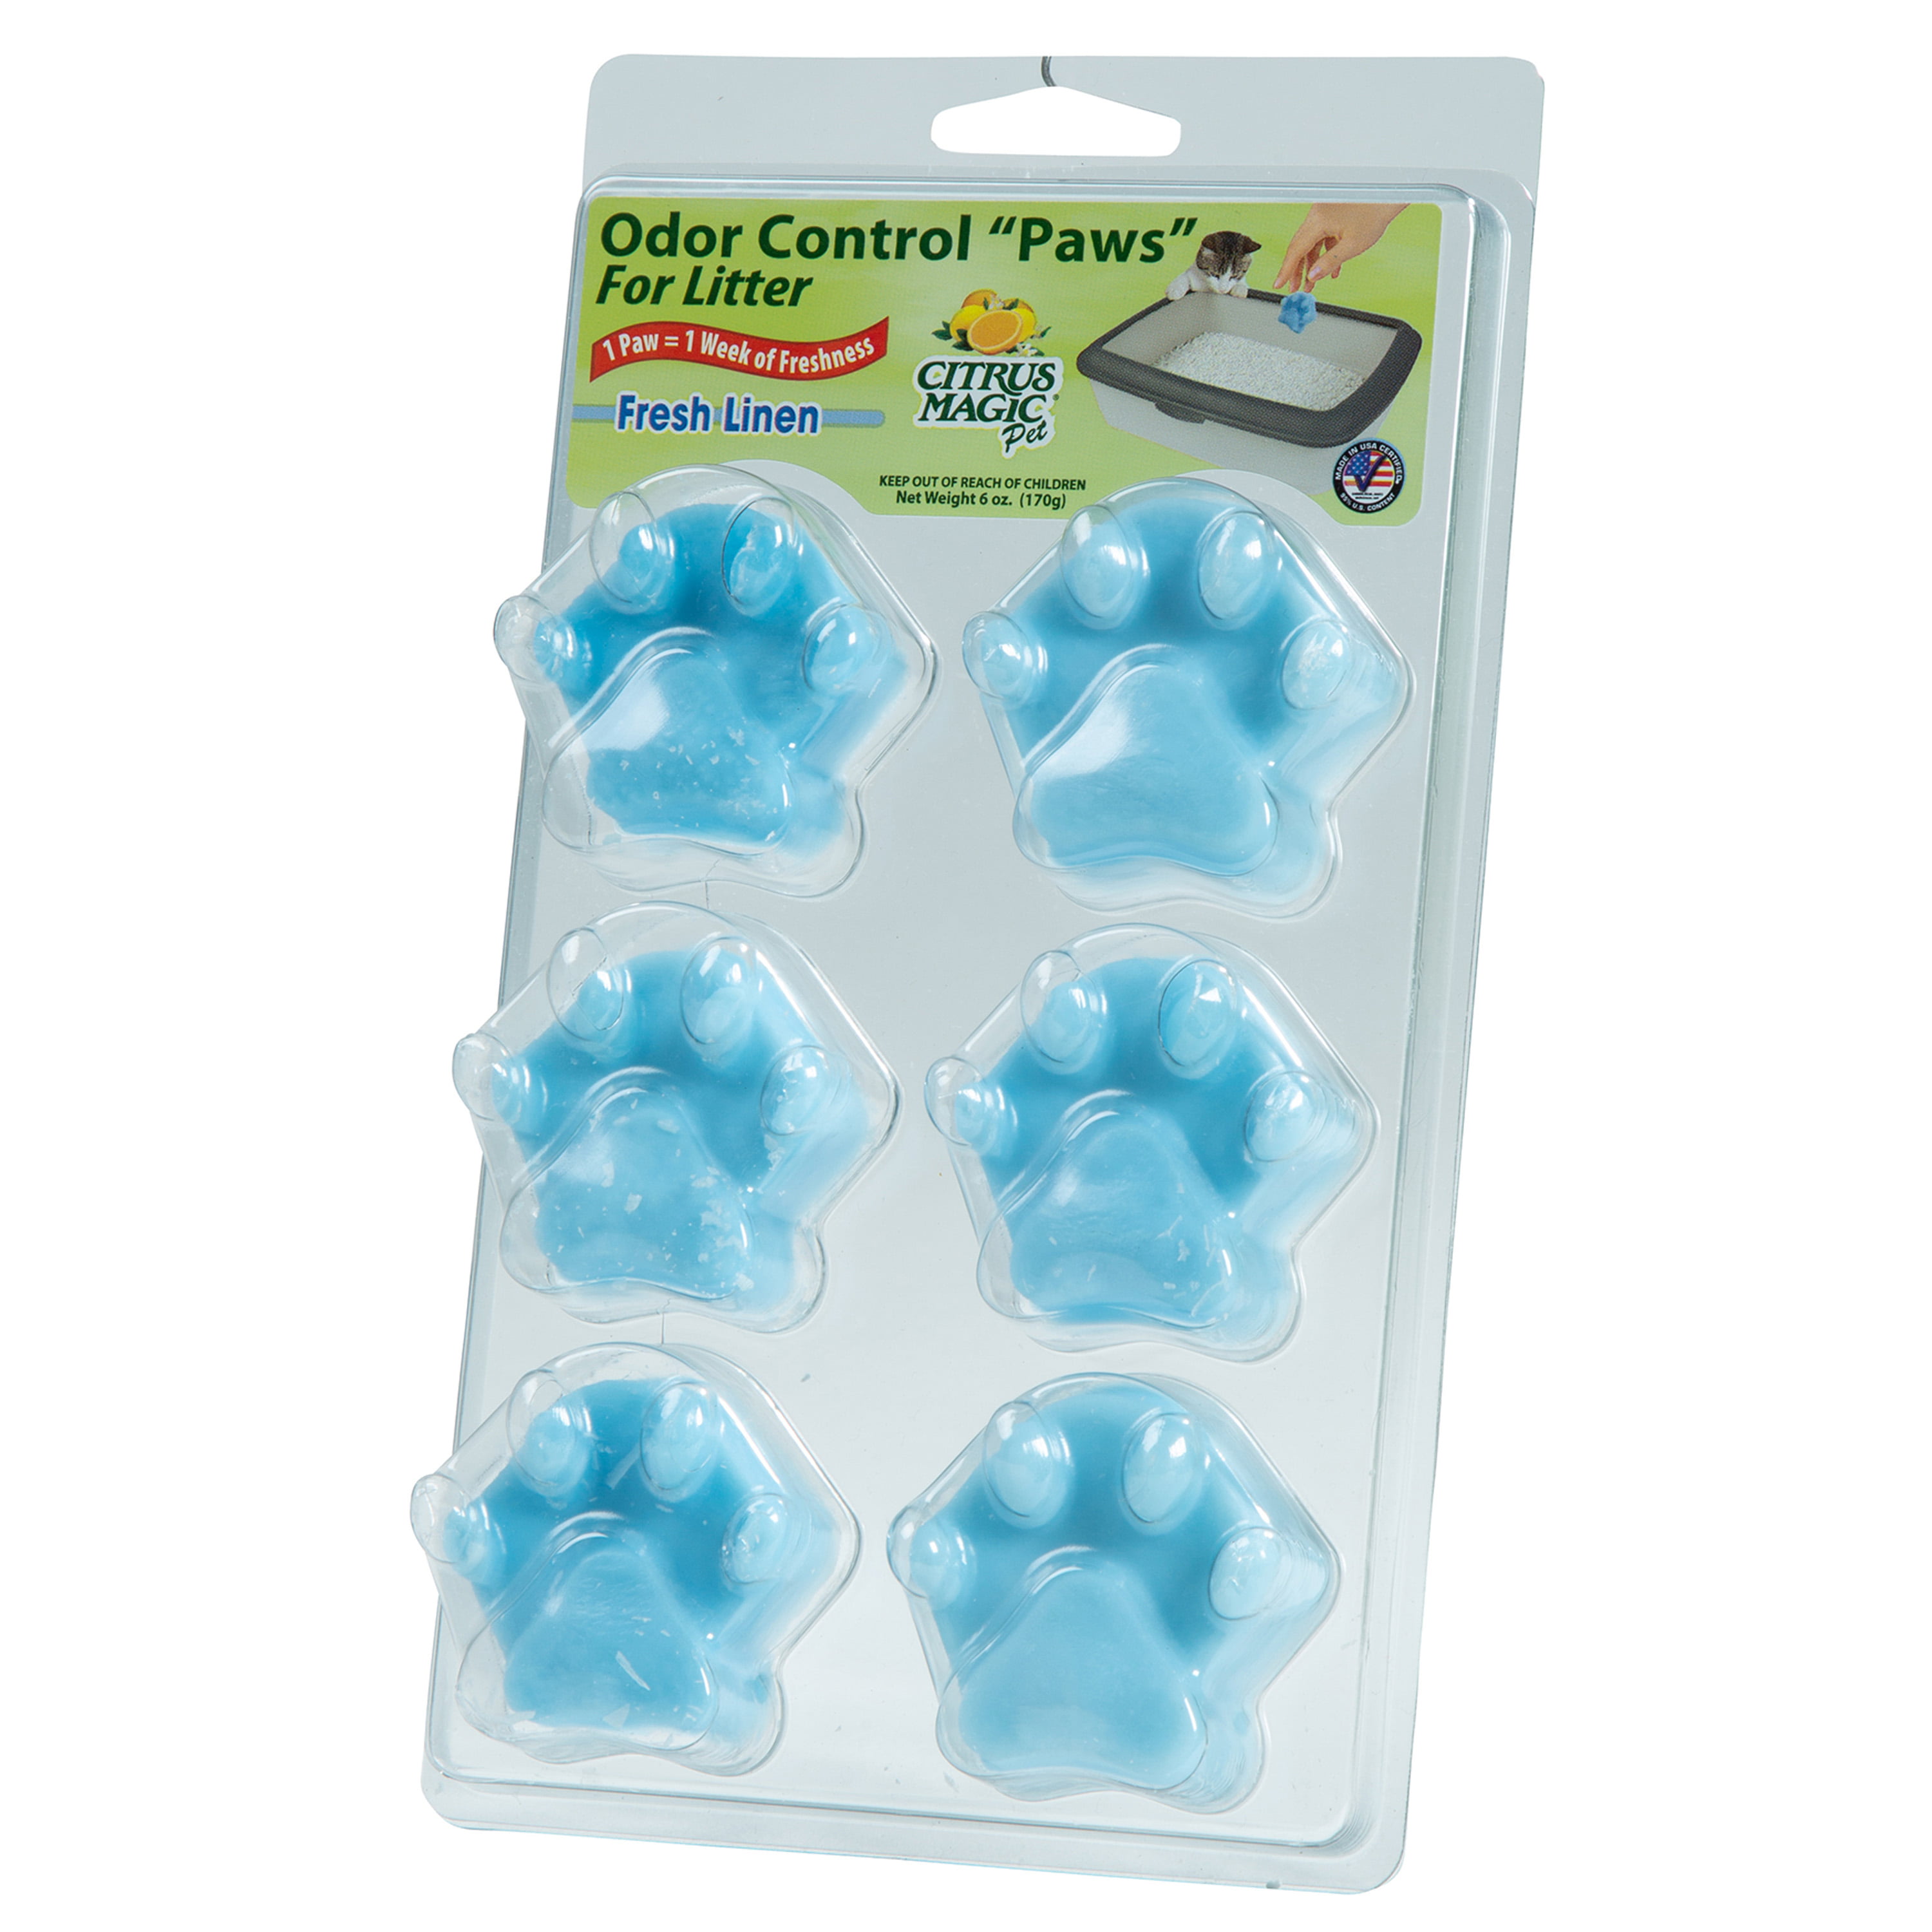 (6-Pack) Citrus Magic Pet Odor Control "Paws" For Cat Litter, Fresh Linen $2 + FS w/ W+